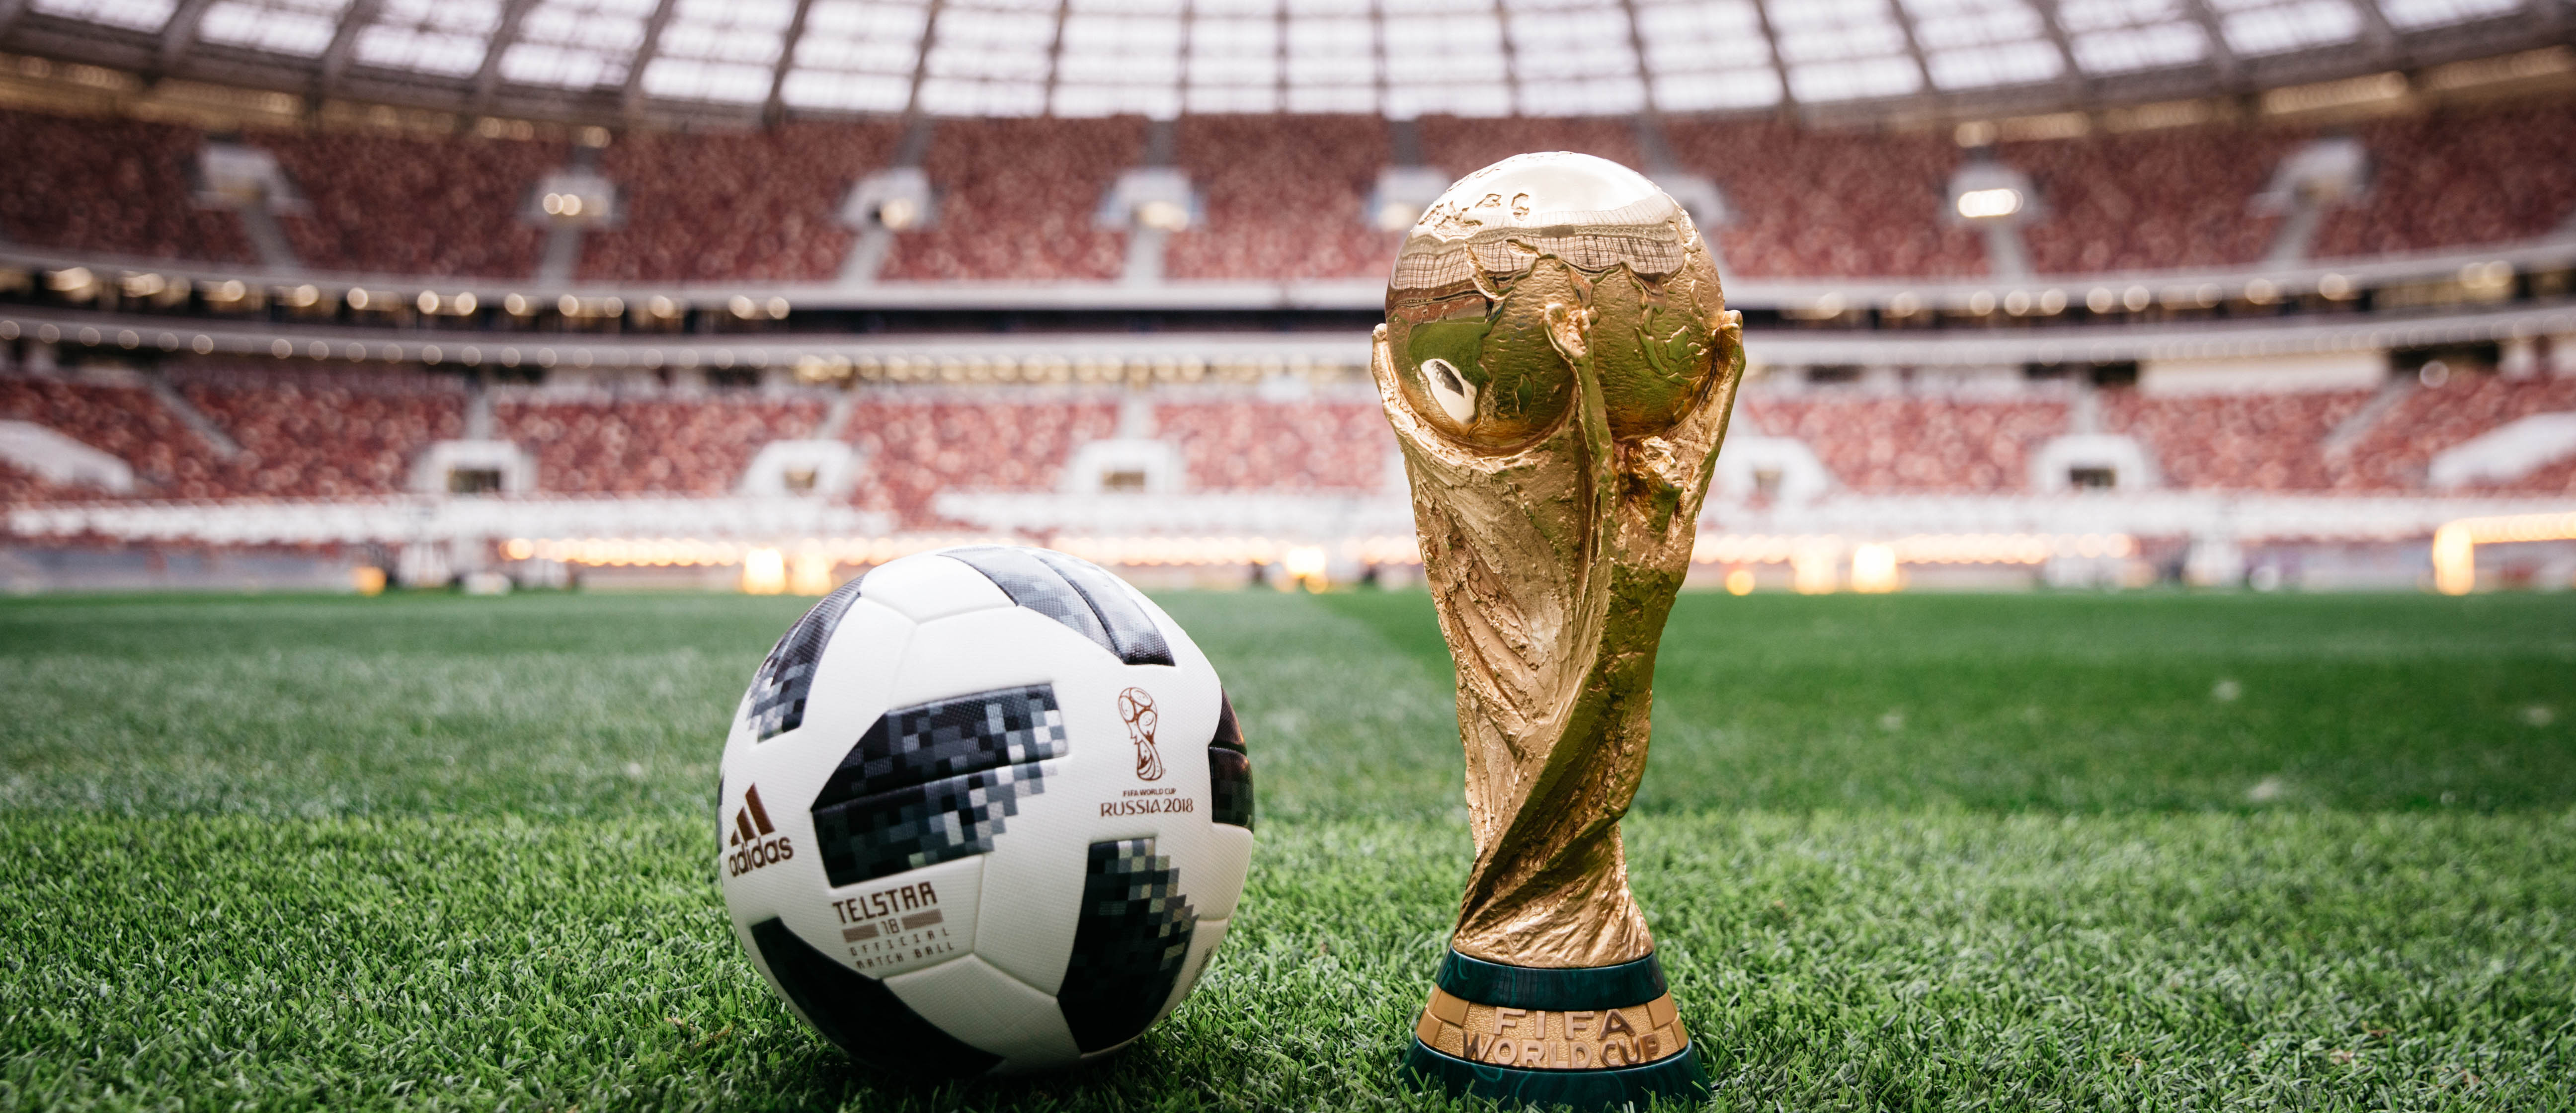 Enfermedad monigote de nieve Deportes adidas releases official ball of 2018 FIFA World Cup | MLSSoccer.com